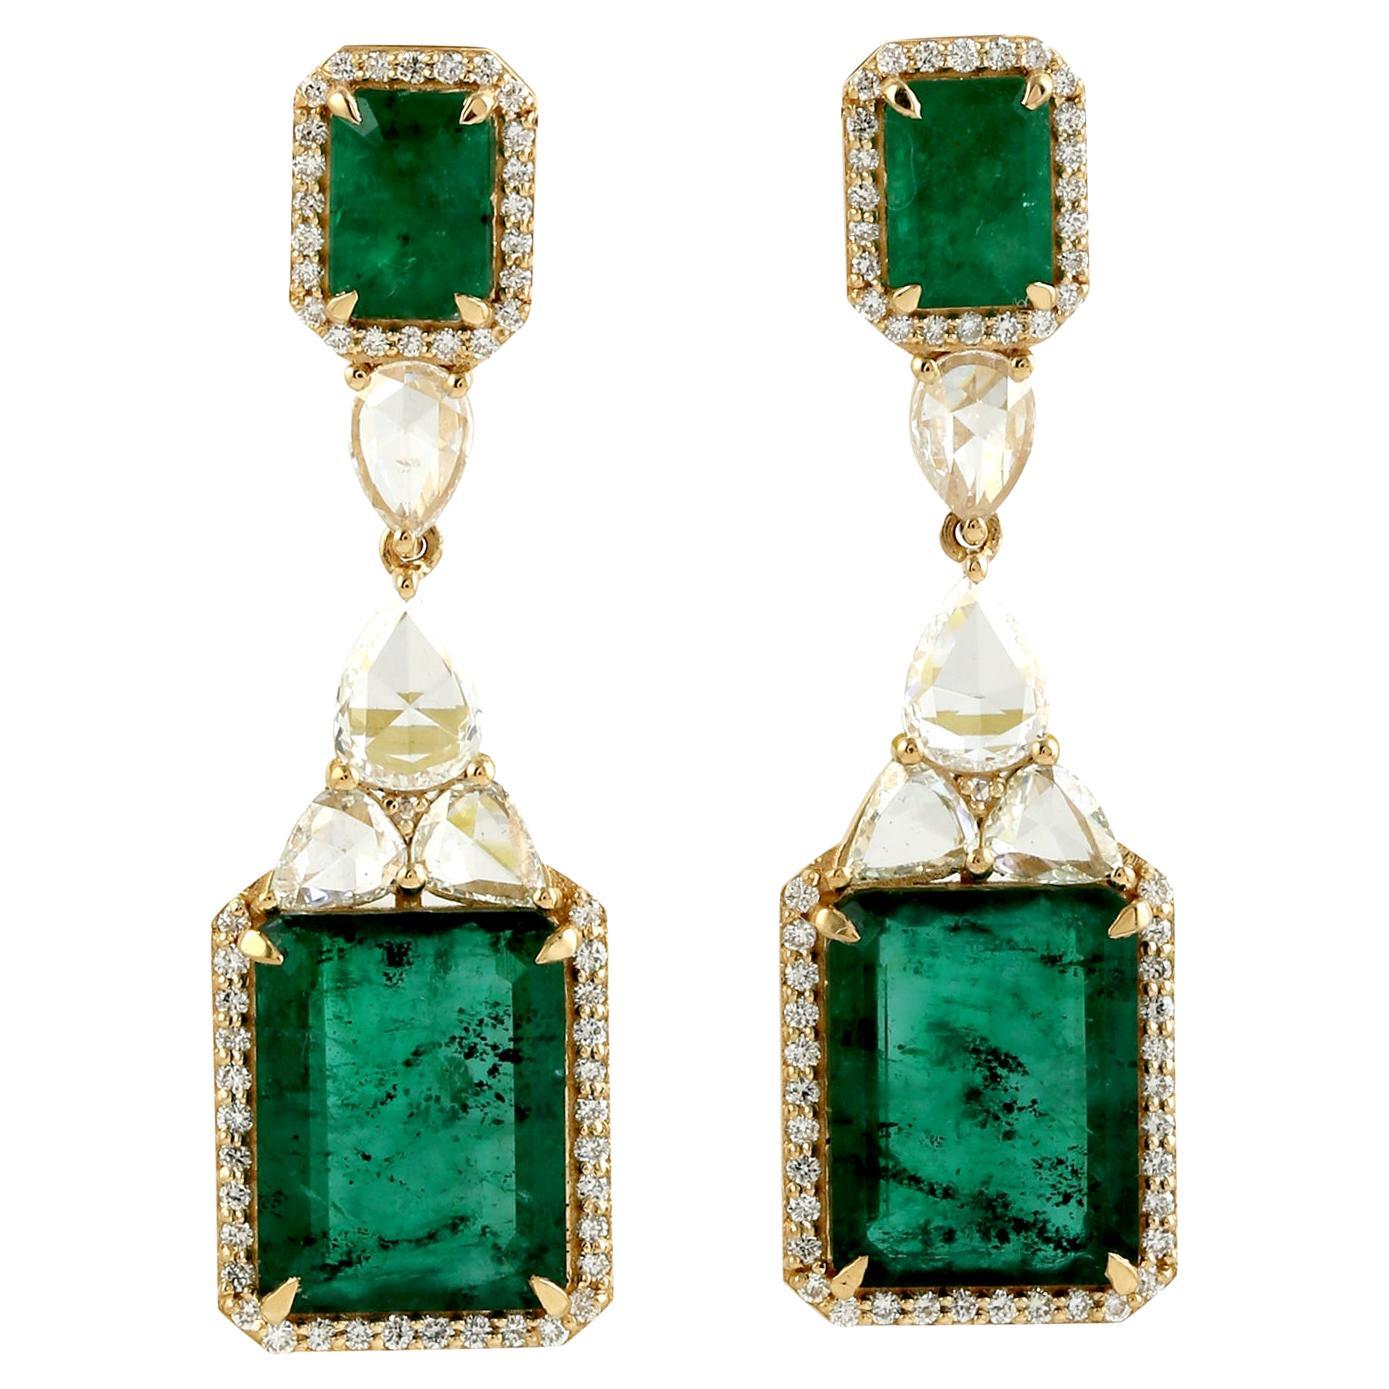 10 ct Zambian Emerald 2 Tier Dangle Earrings With Diamonds In 18k Yellow Gold